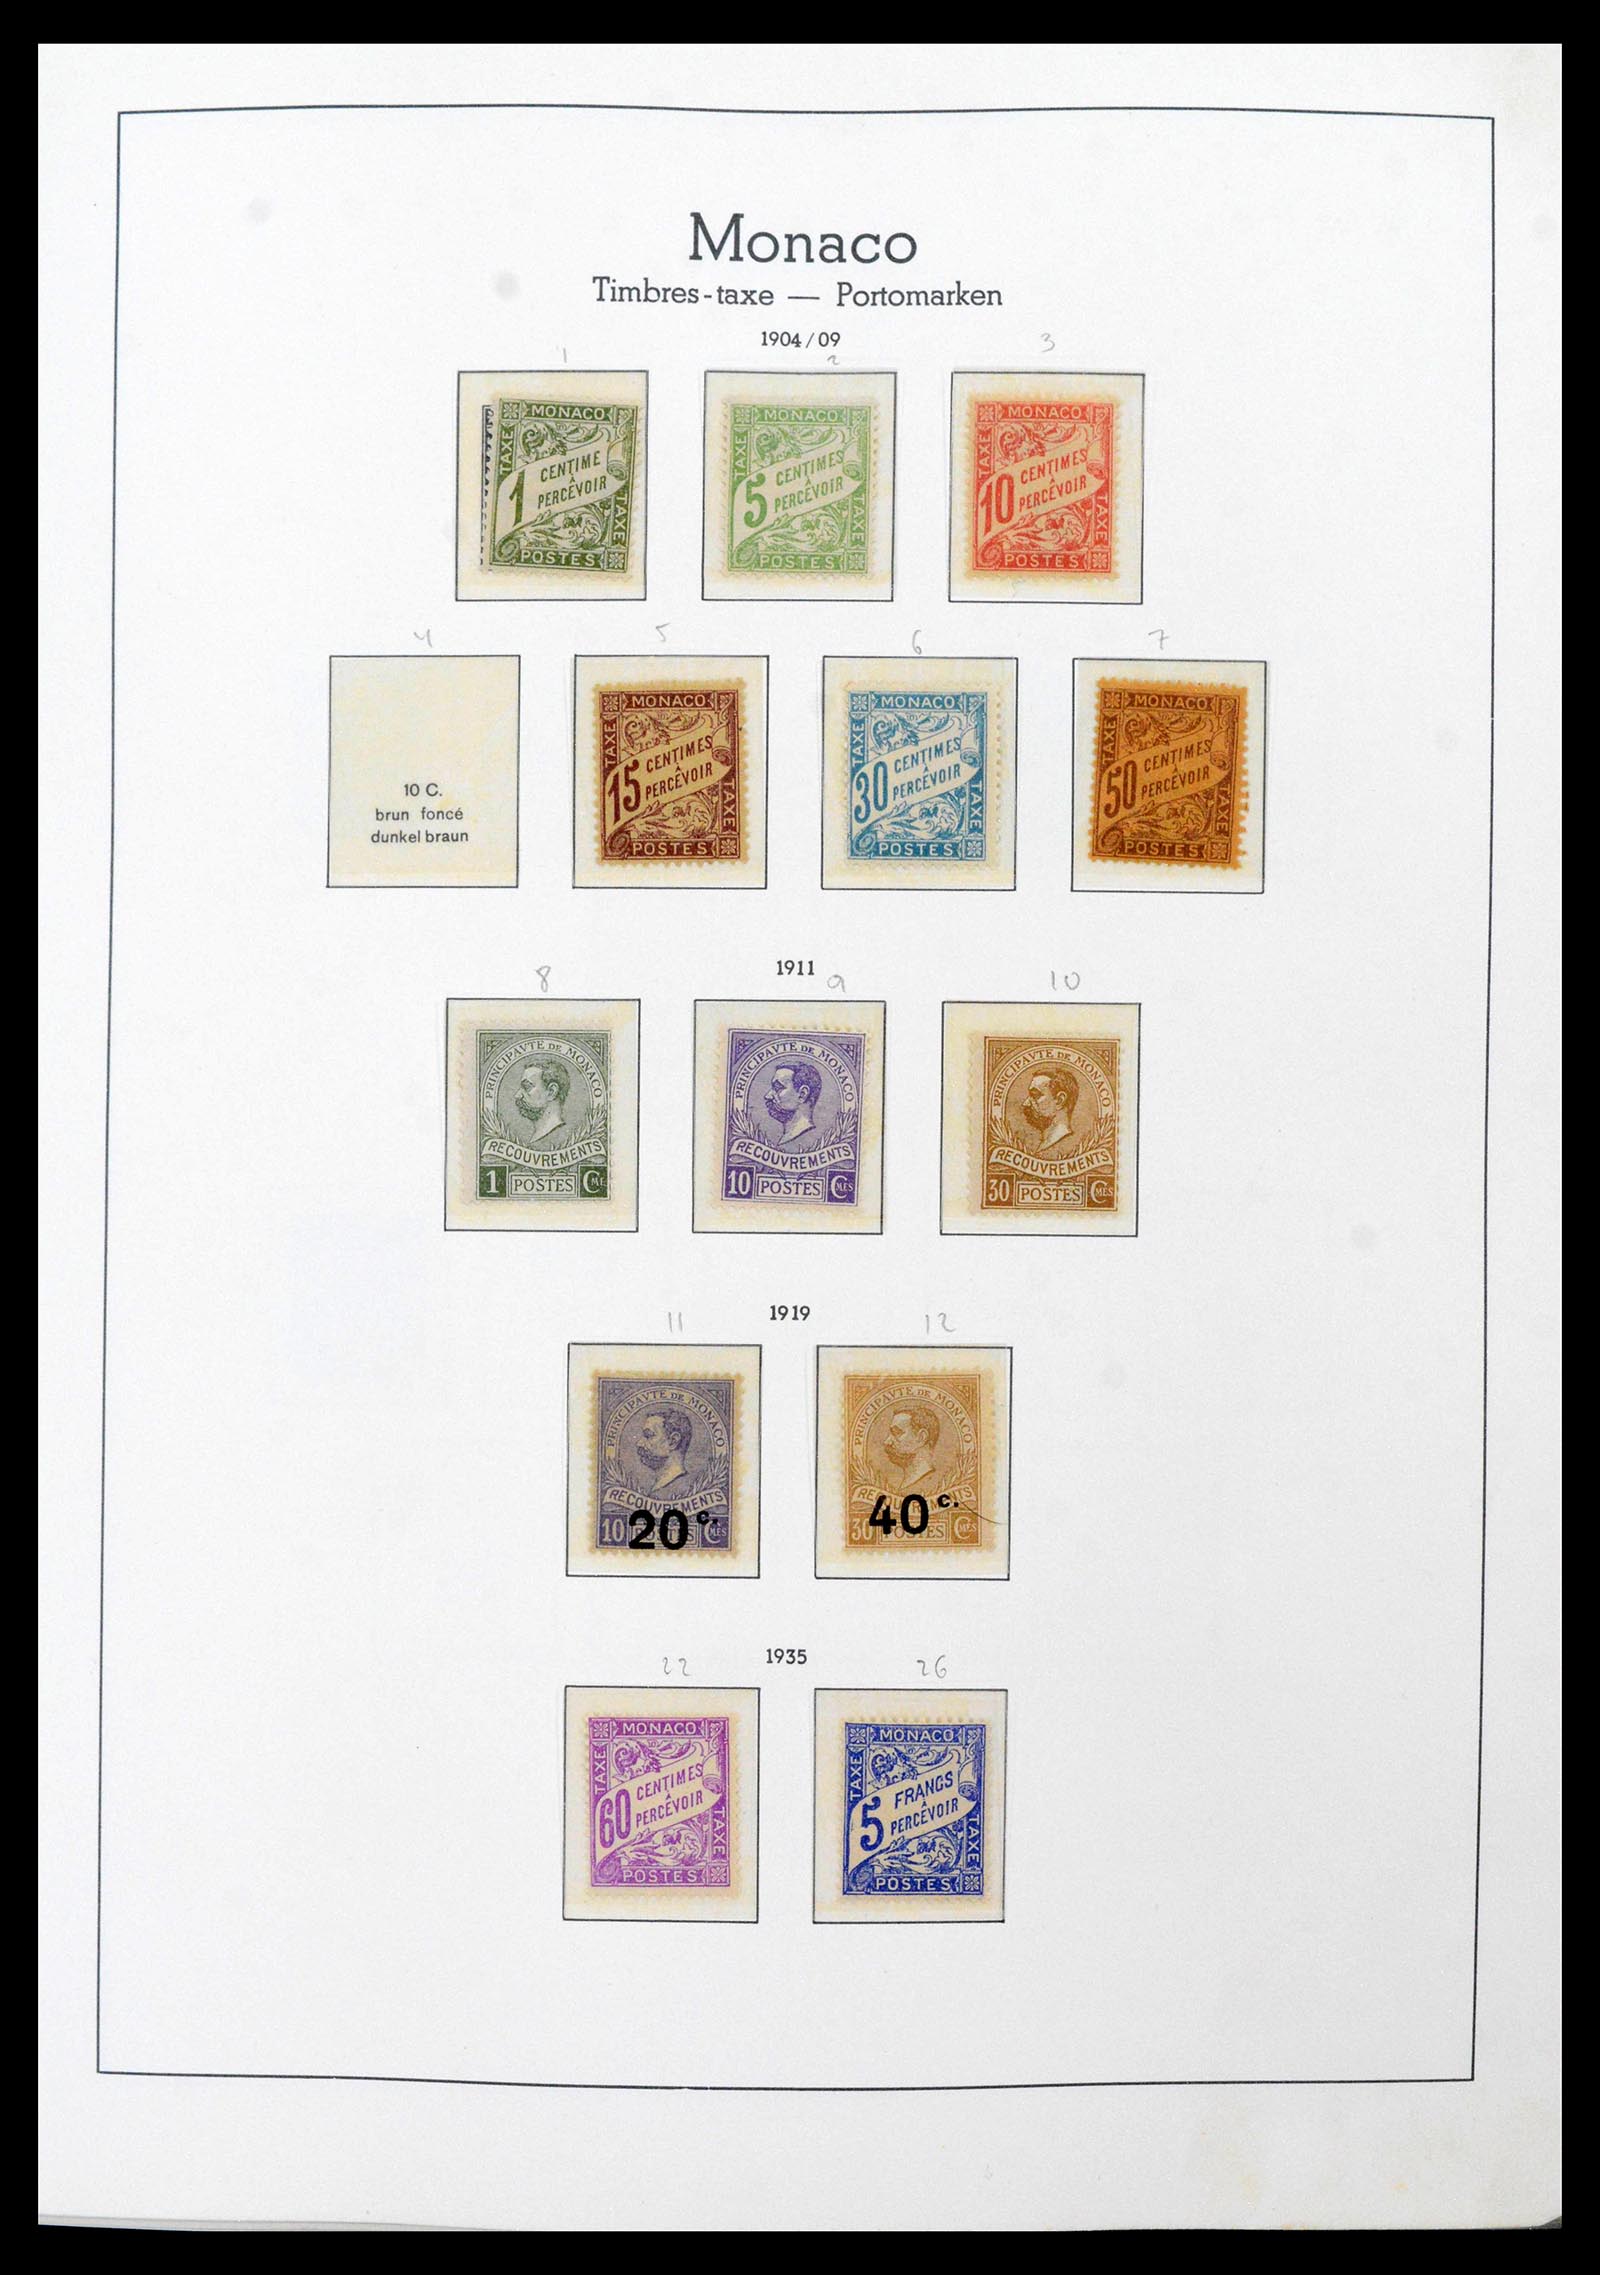 39250 0003 - Stamp collection 39250 Monaco 1885-1995.